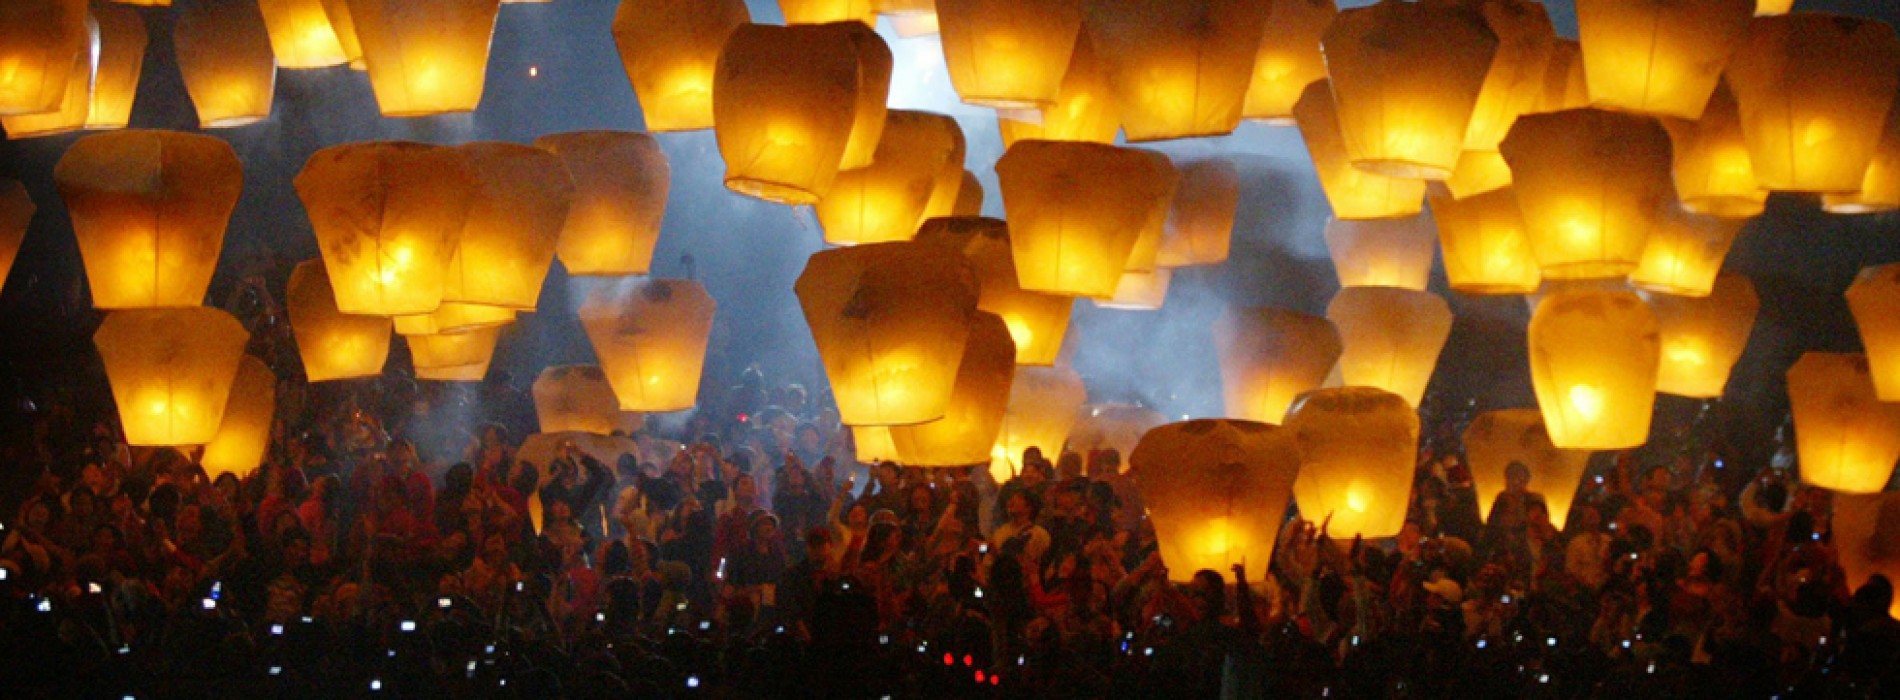 The bright and beautiful Taiwan Lantern Festival!